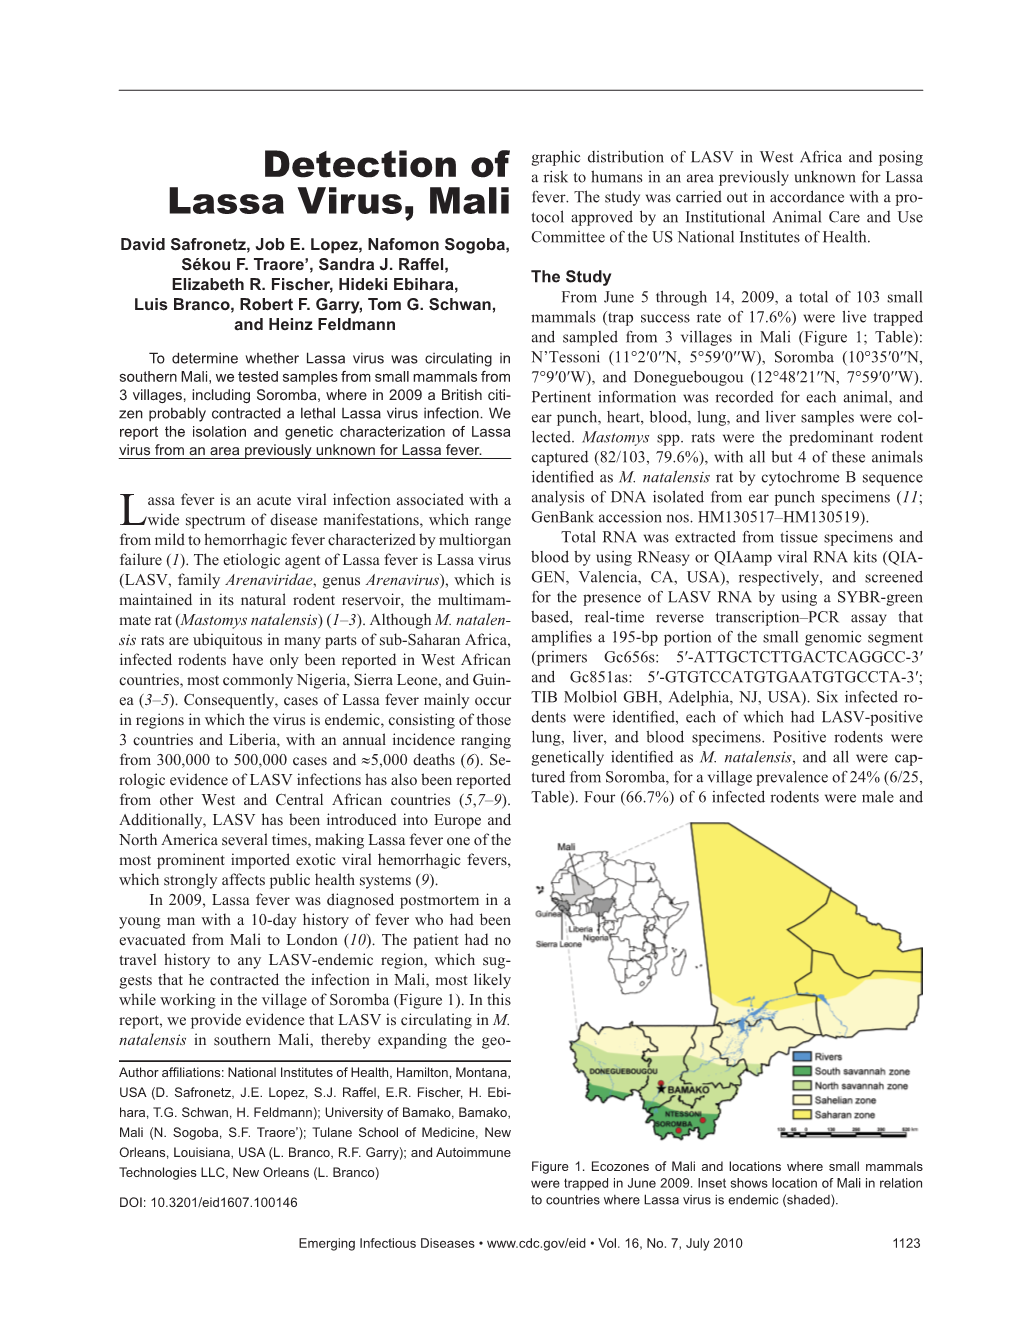 Detection of Lassa Virus, Mali